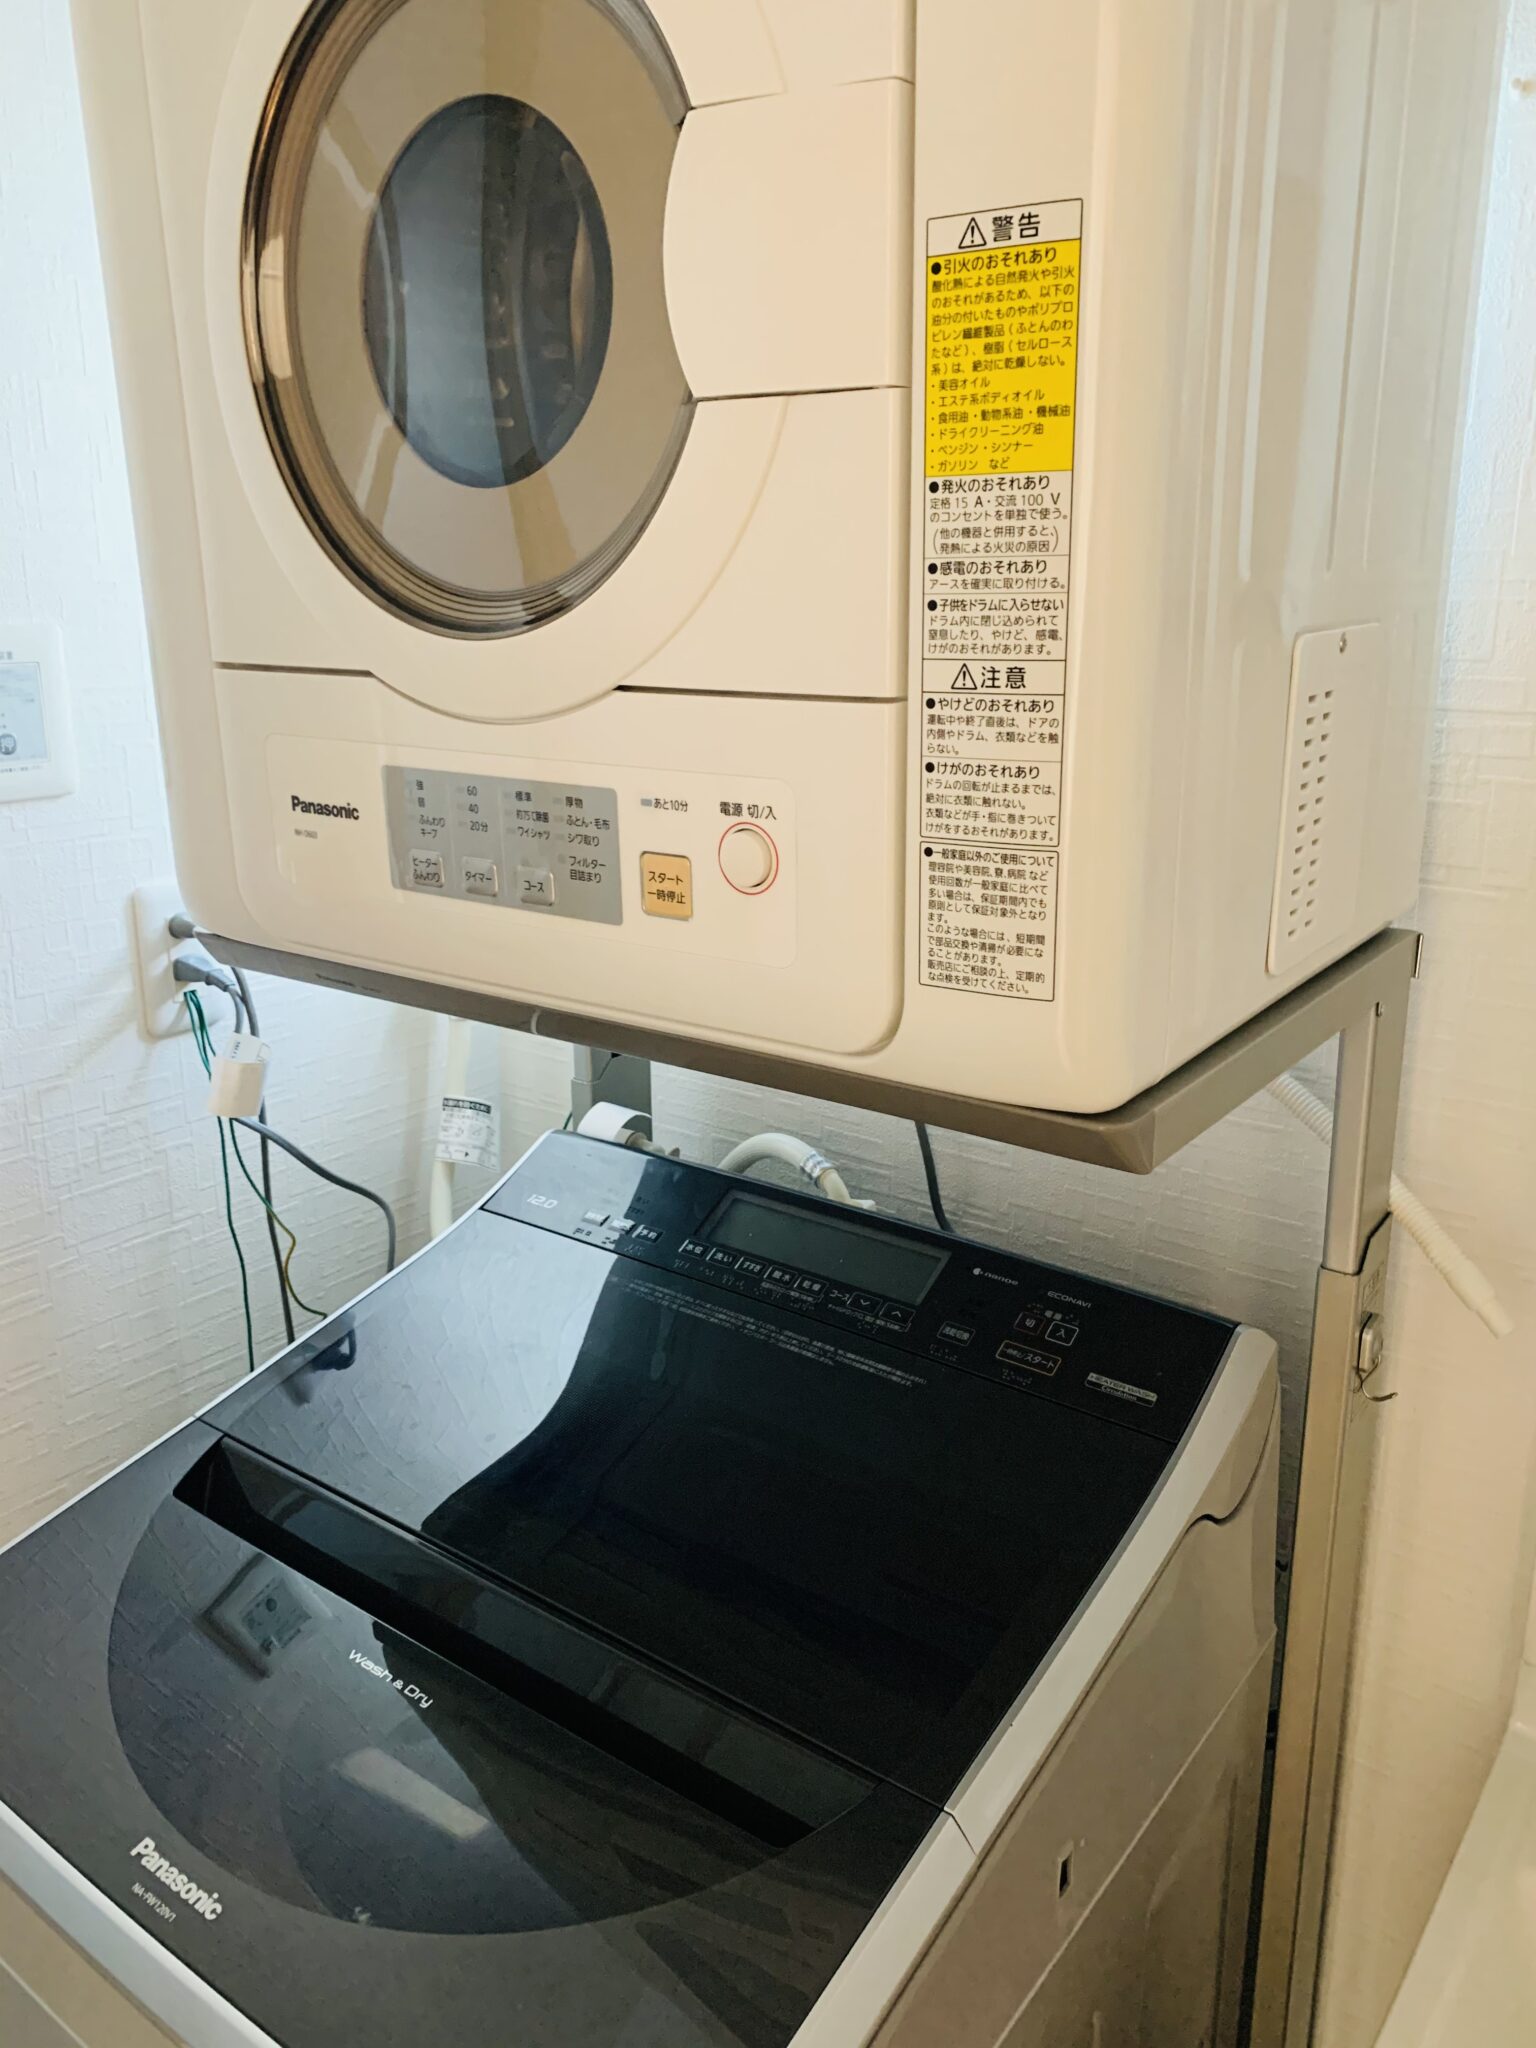 Panasonic 全自動洗濯機専用ユニット台 N-UF11-S - 棚/ラック